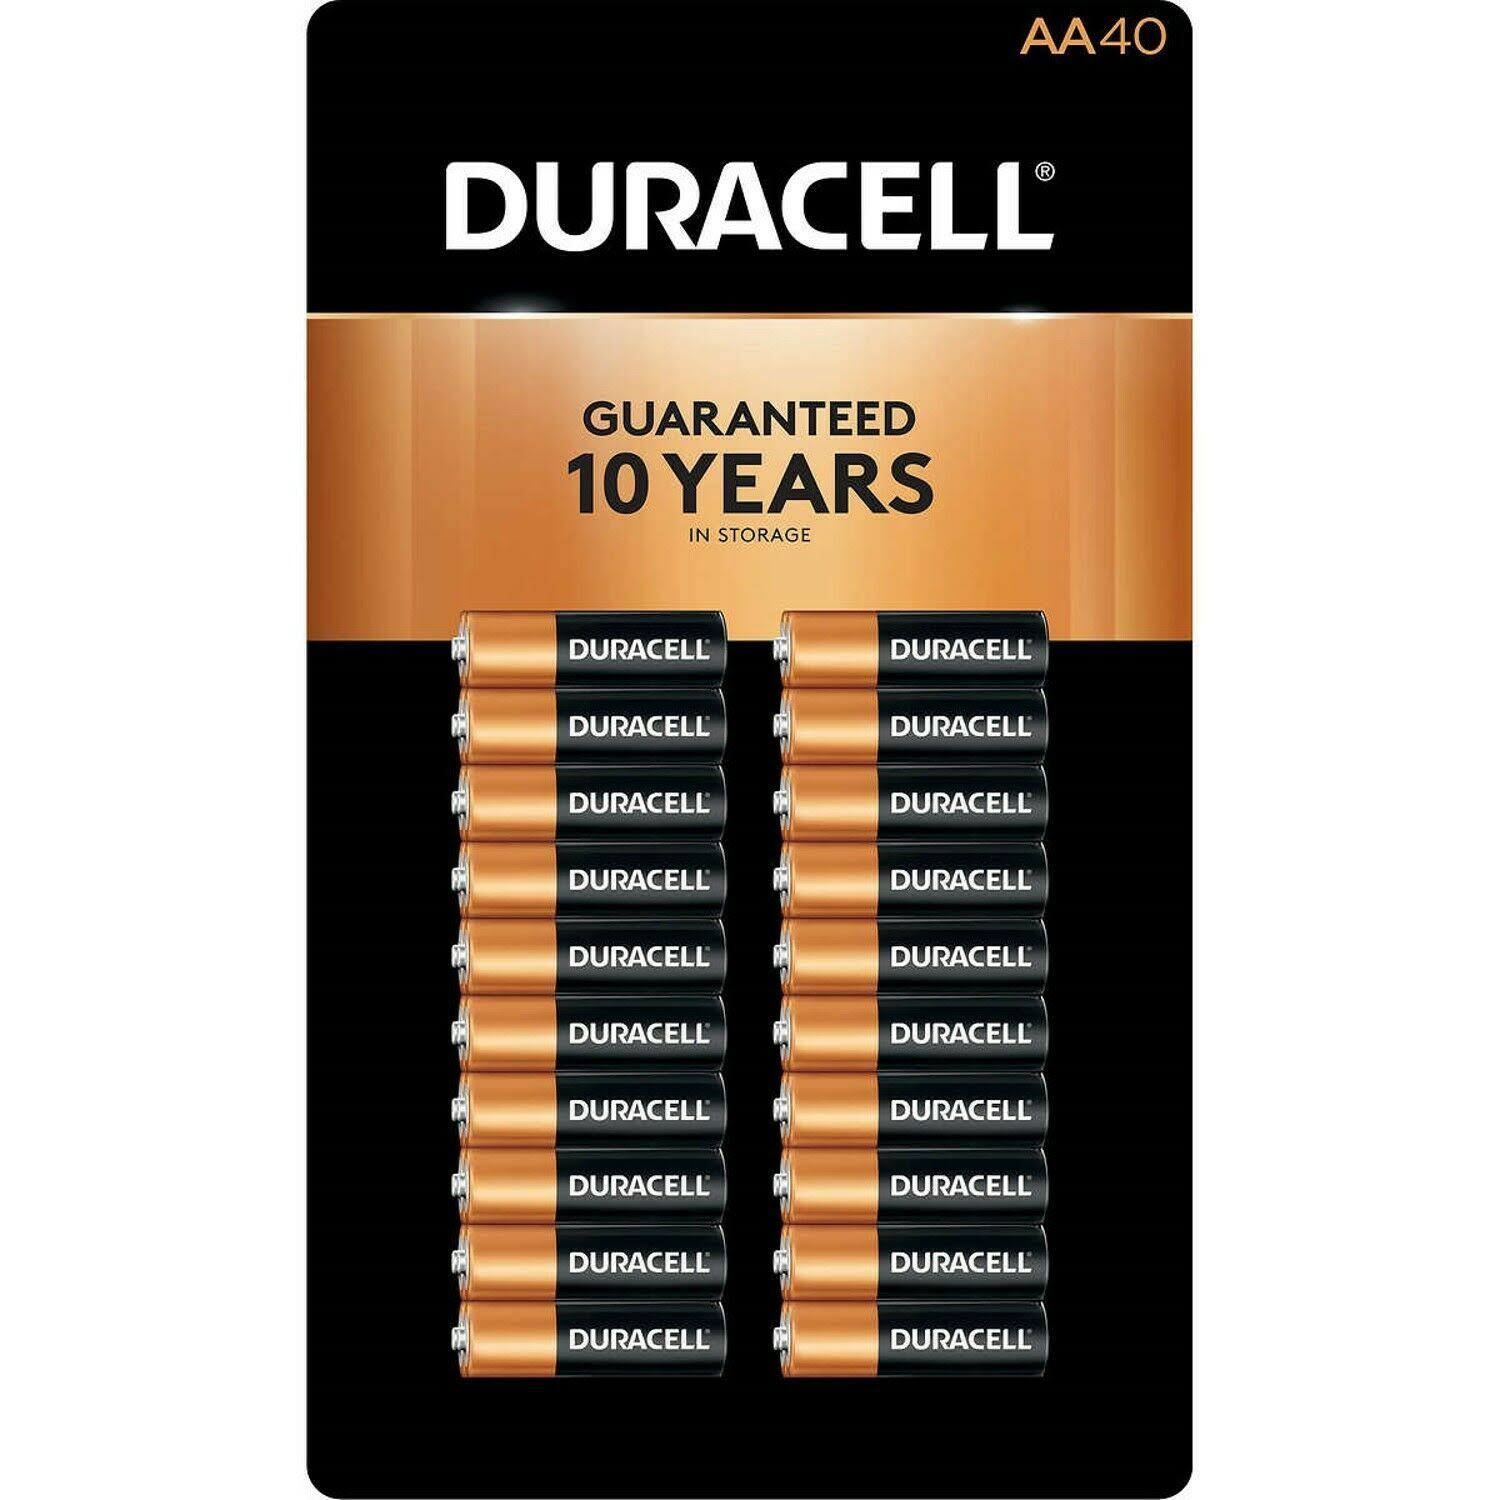 Duracell Coppertop Alkaline Batteries - AA, 40 Pack